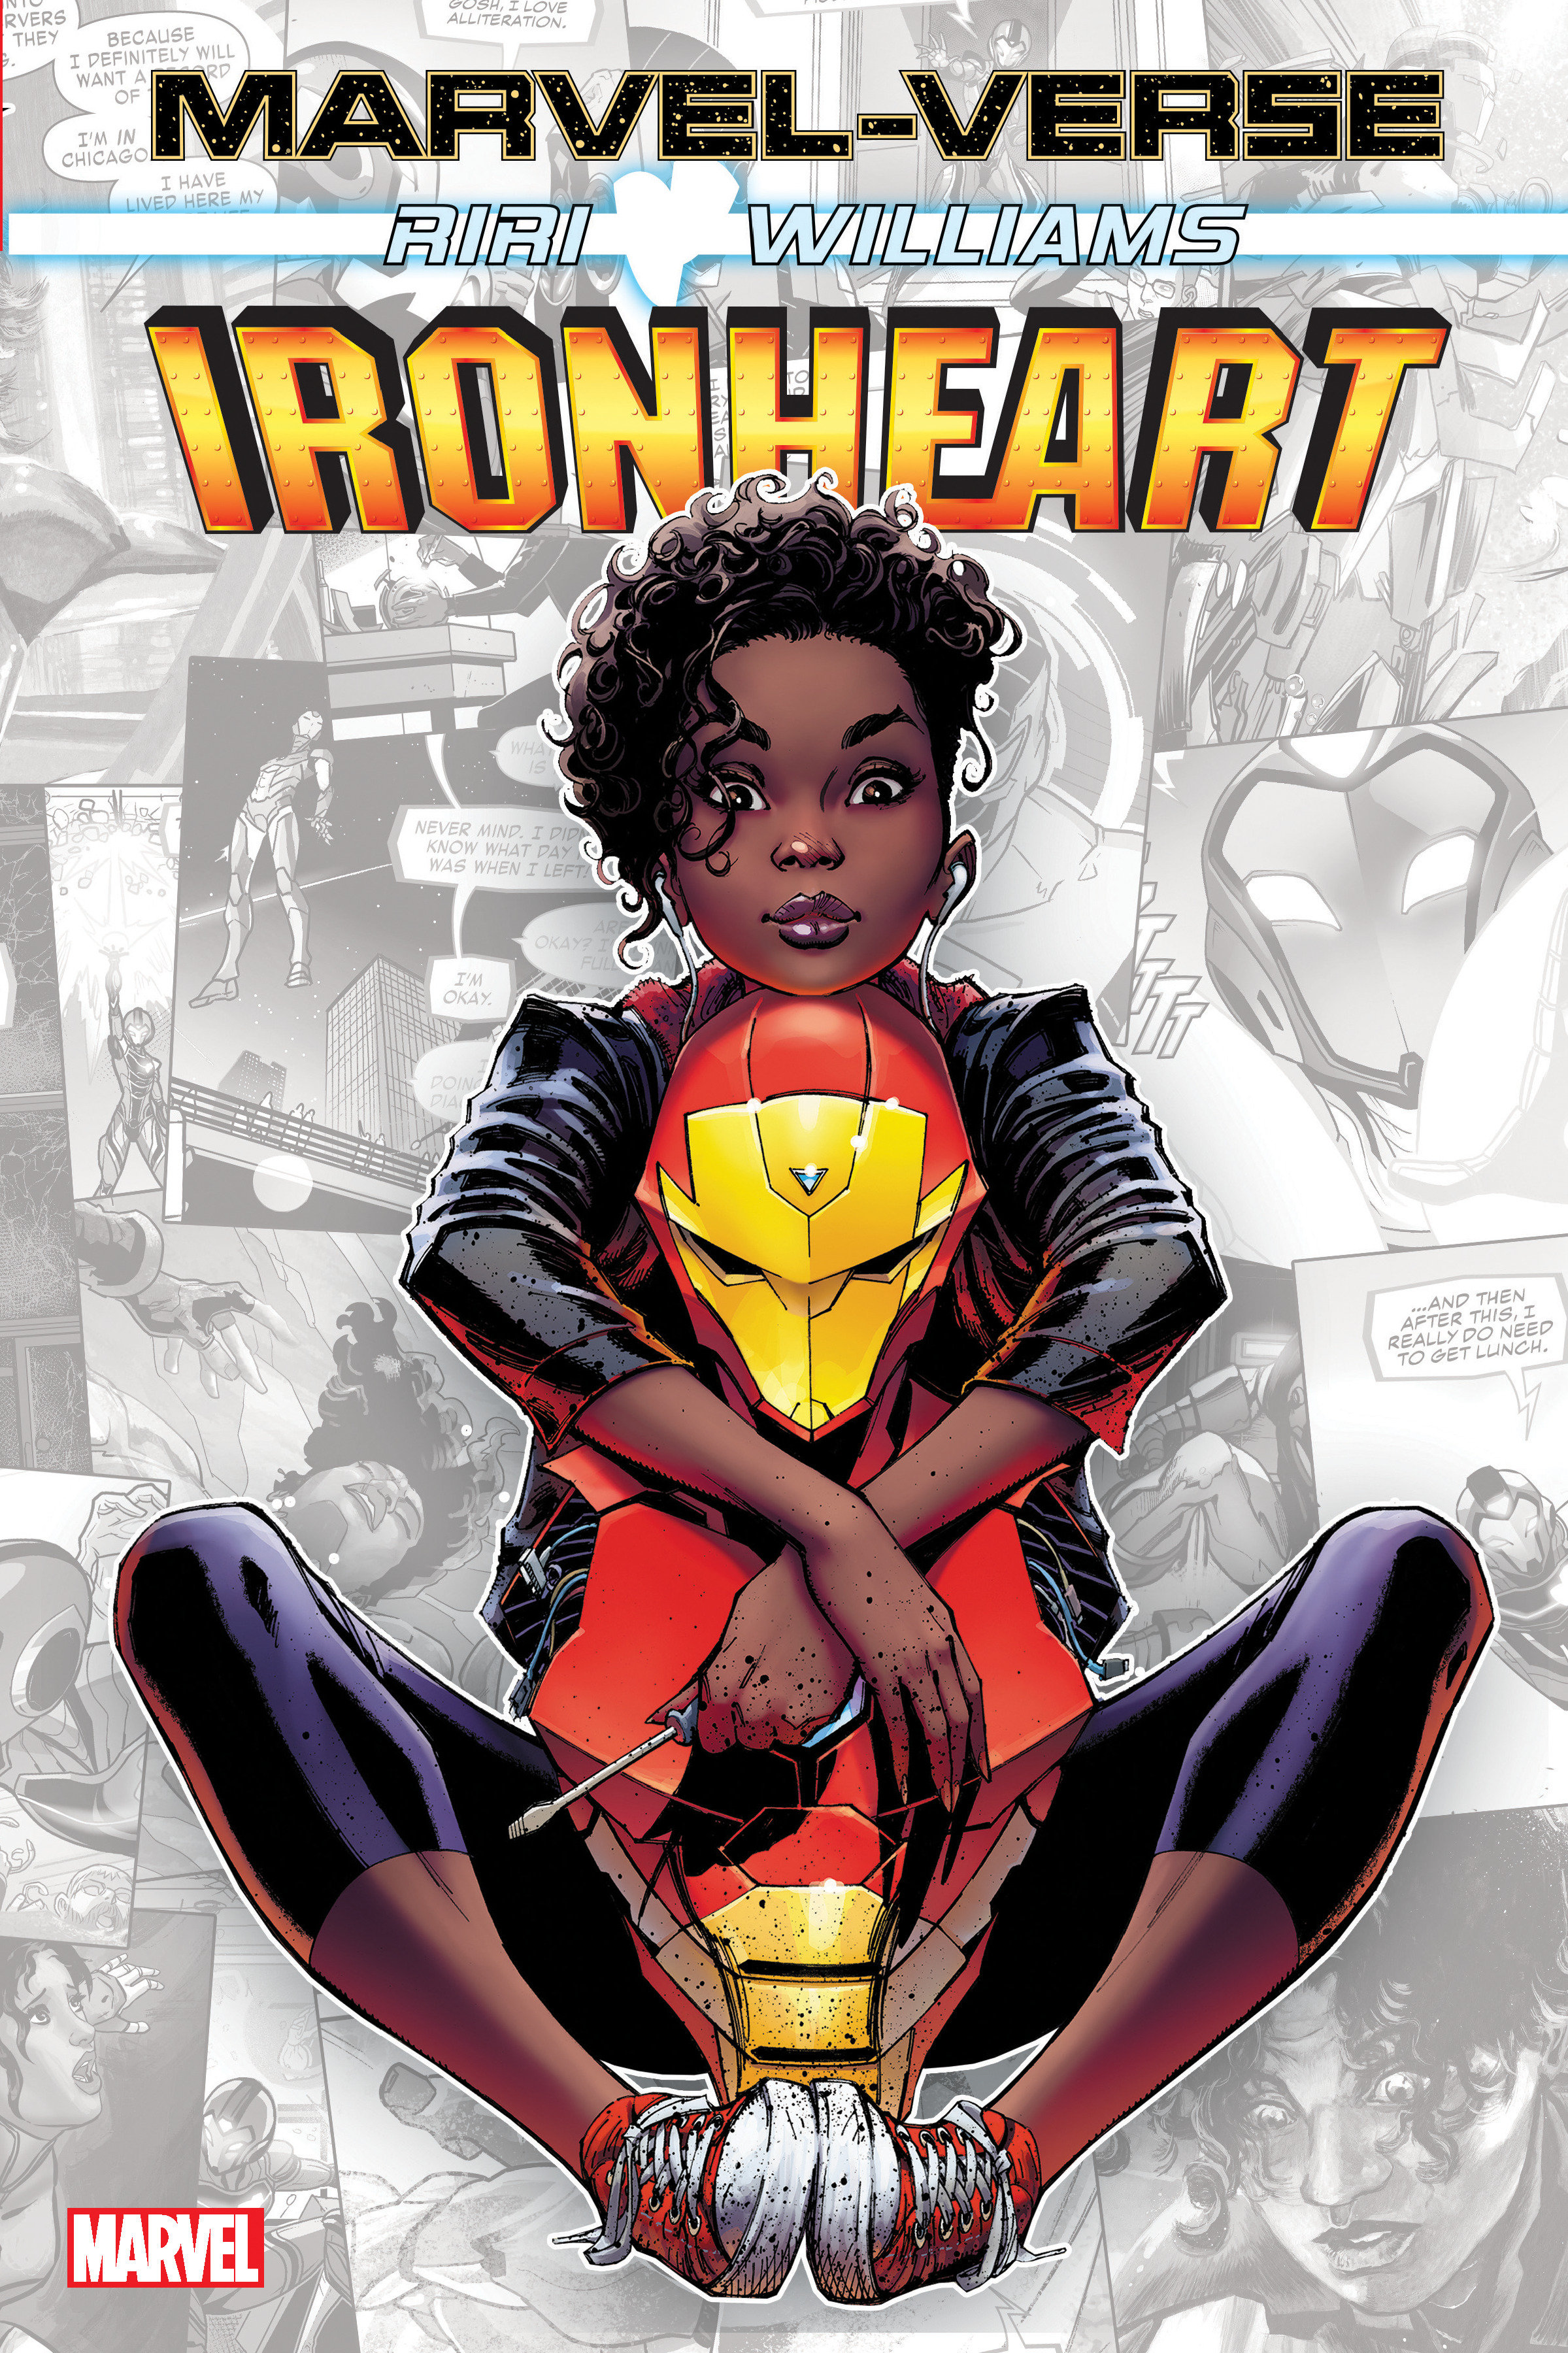 Marvel-Verse Graphic Novel Volume 31 Ironheart